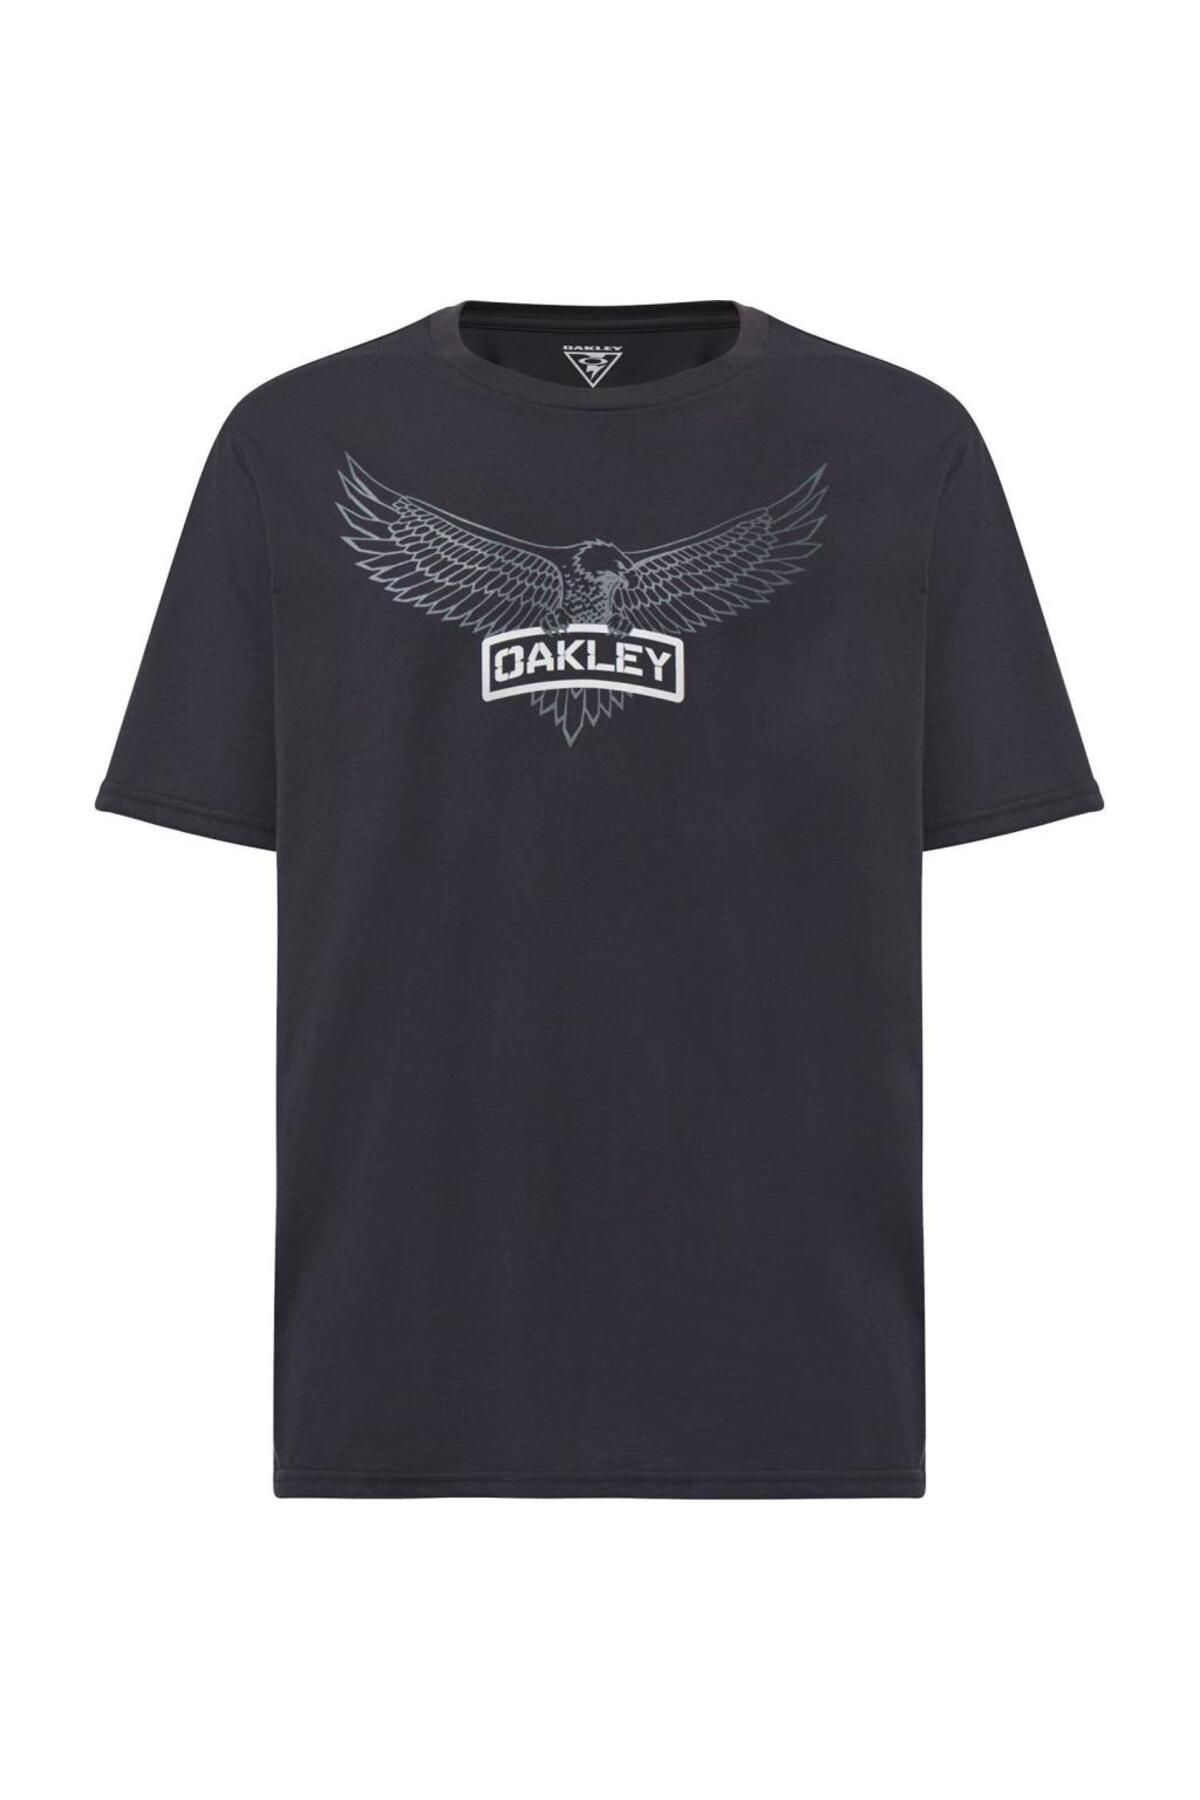 Oakley Si Eagle Tab Tee Erkek T-shirt